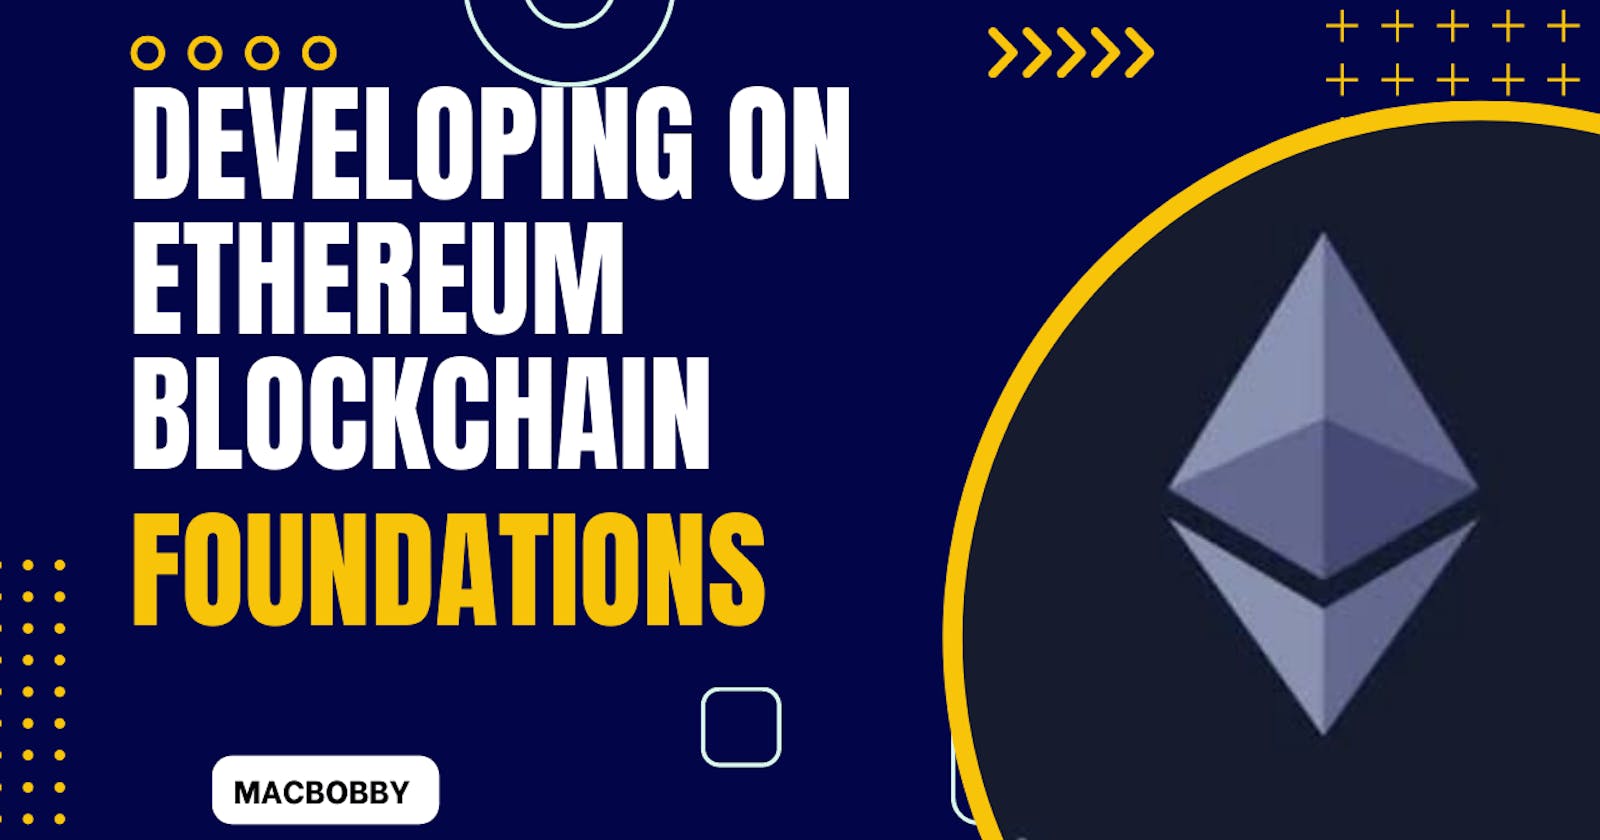 Developing on Ethereum Blockchain: Foundations